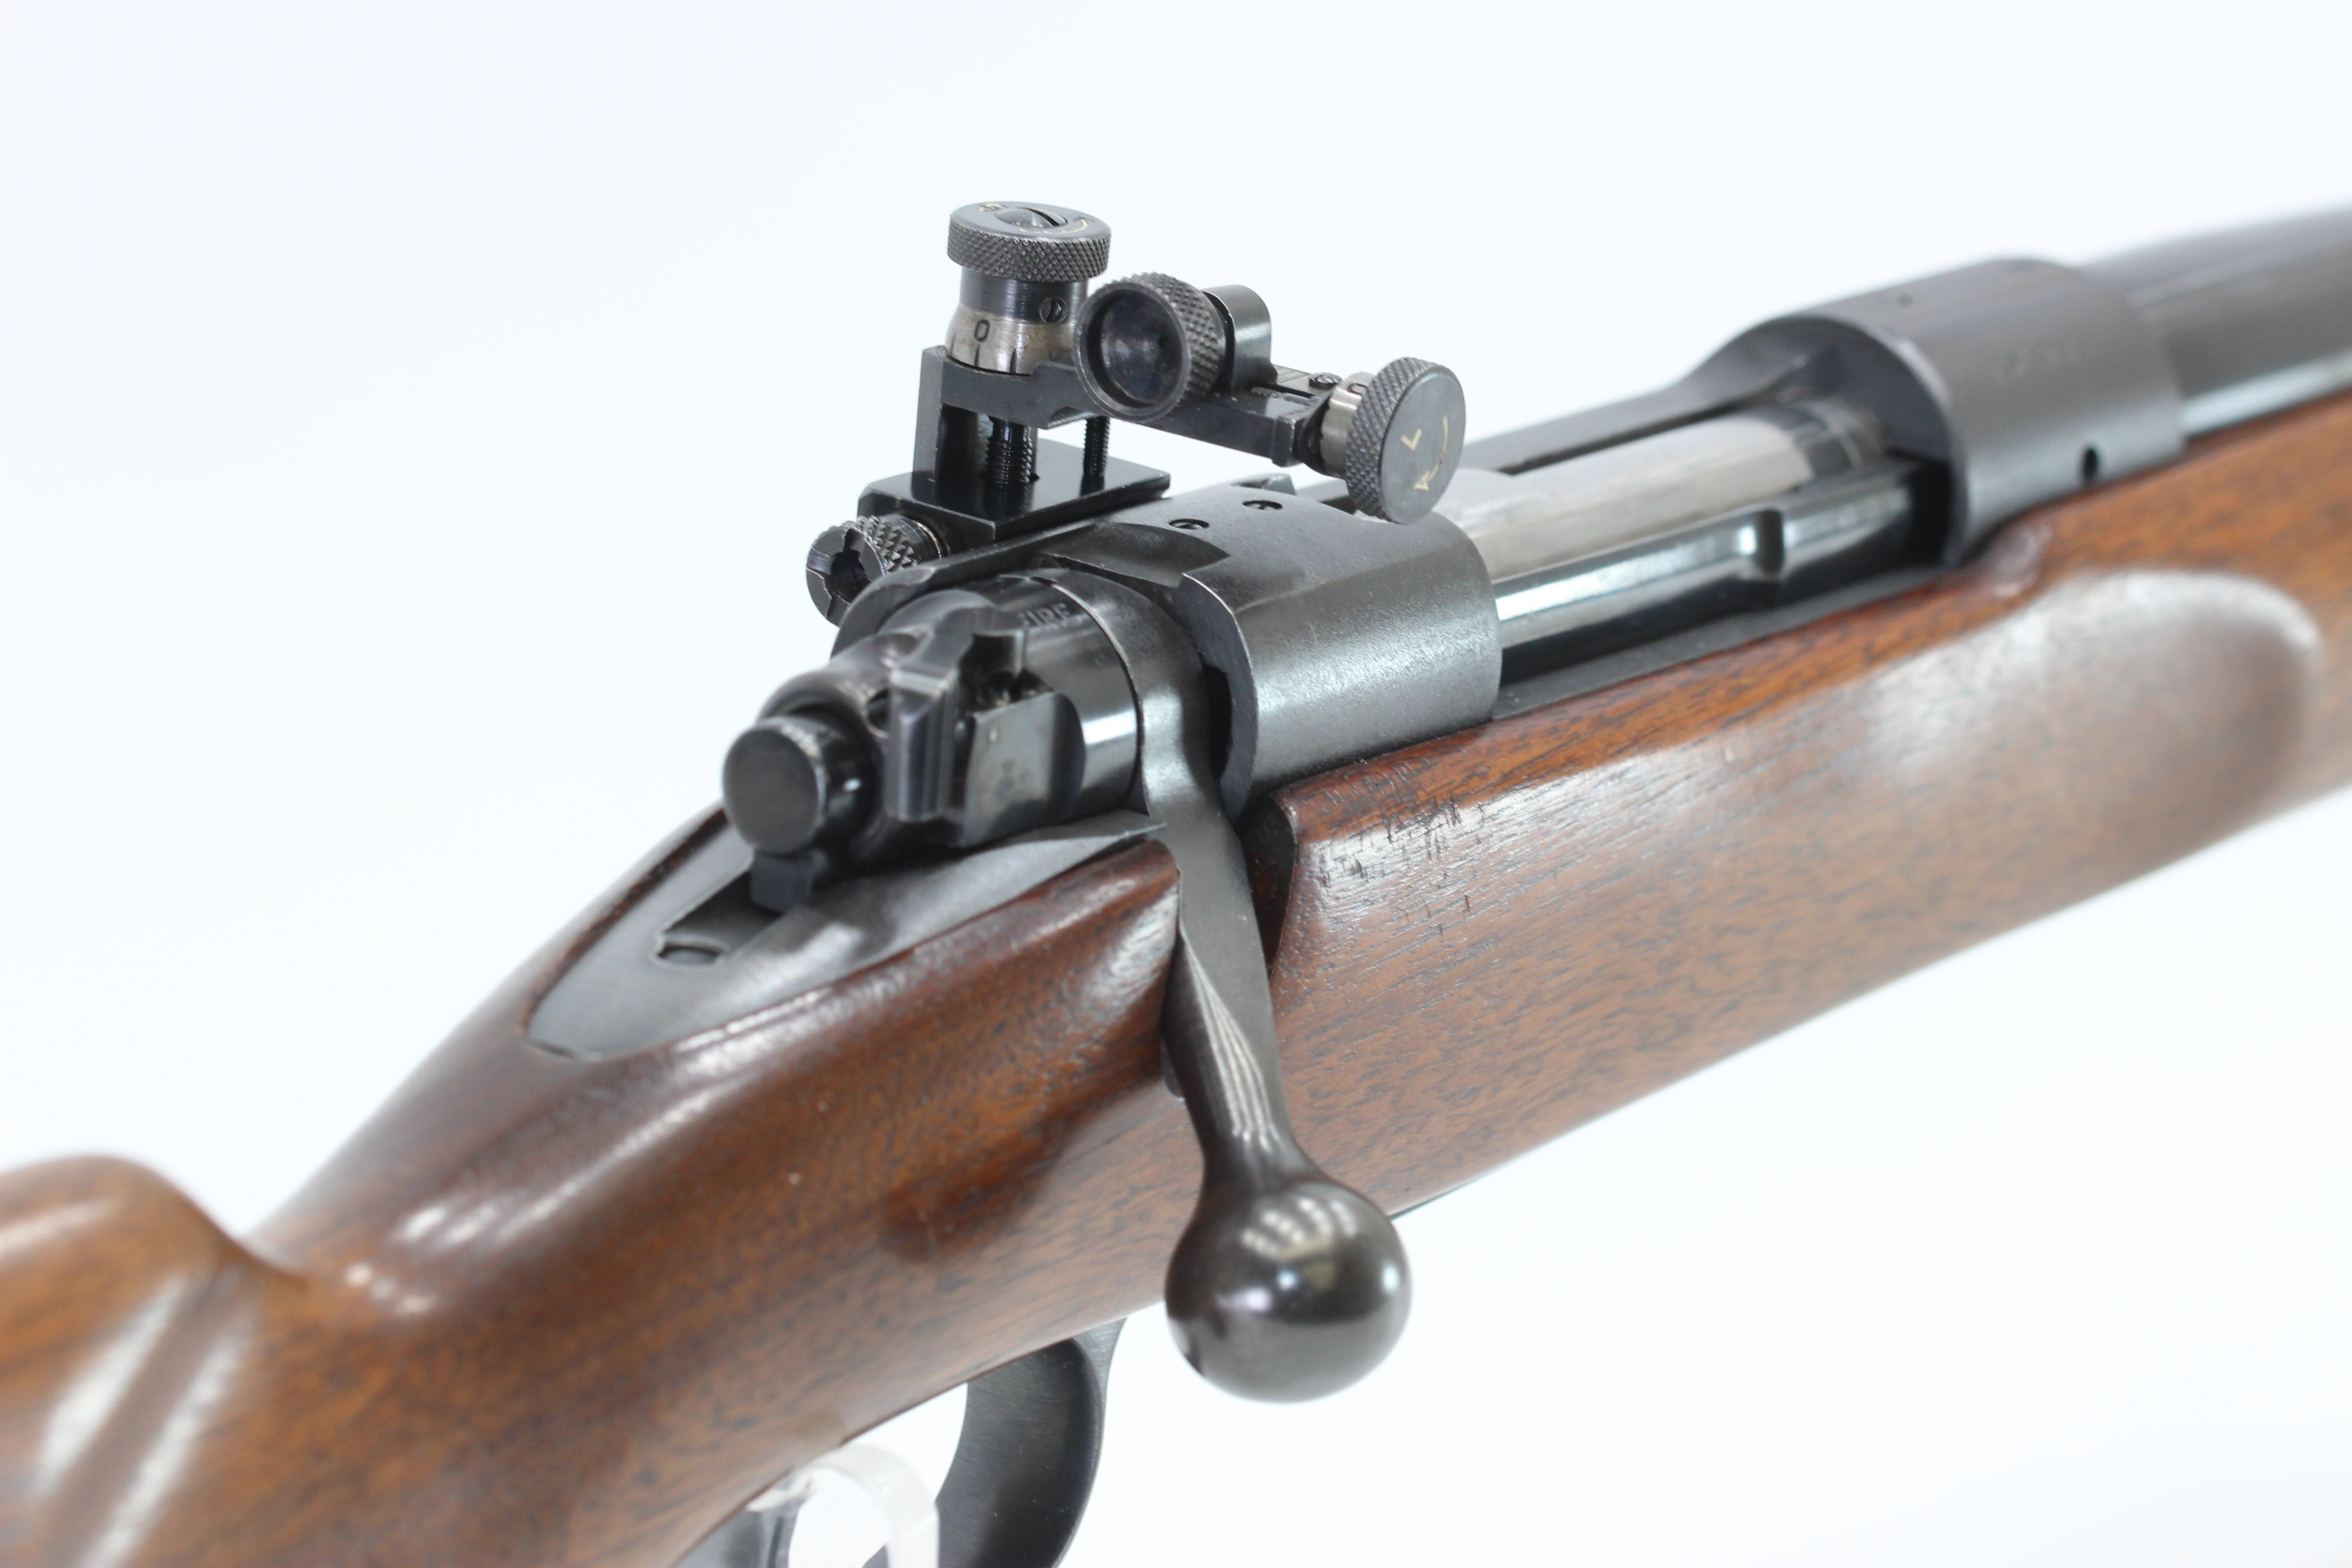 .30-06 Springfield National Match Rifle - 1953